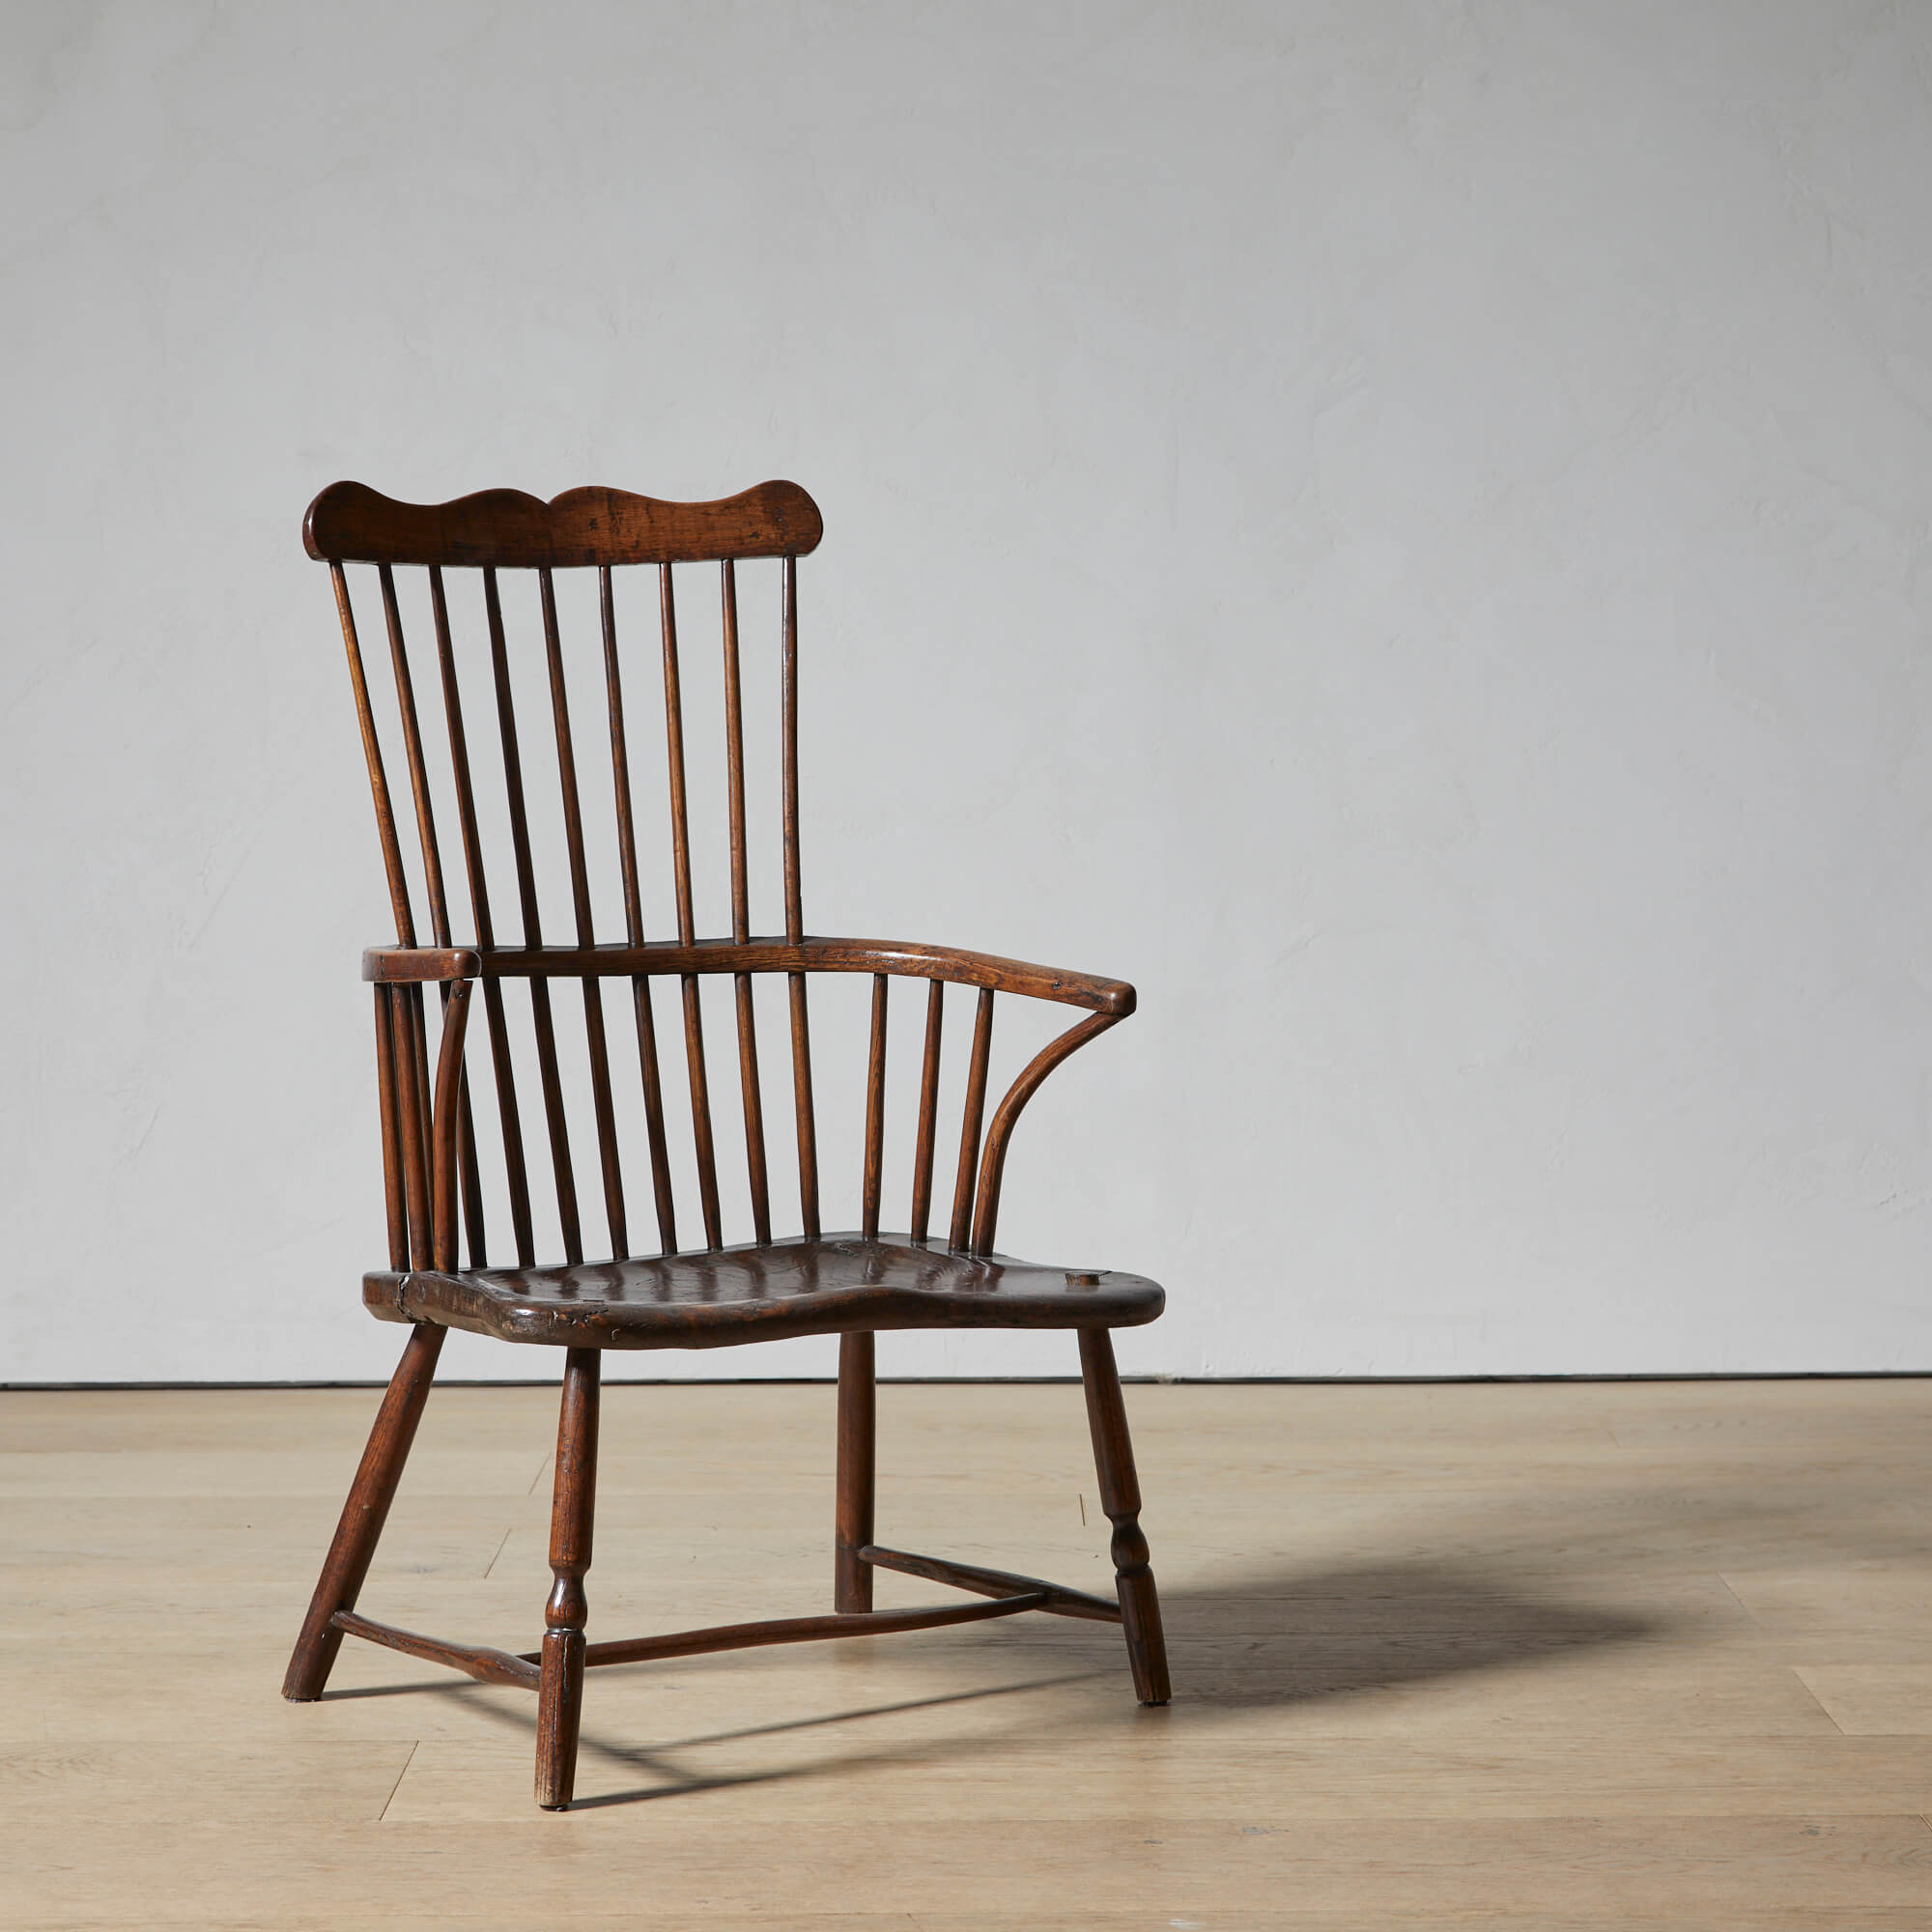 18th century Windsor Chair